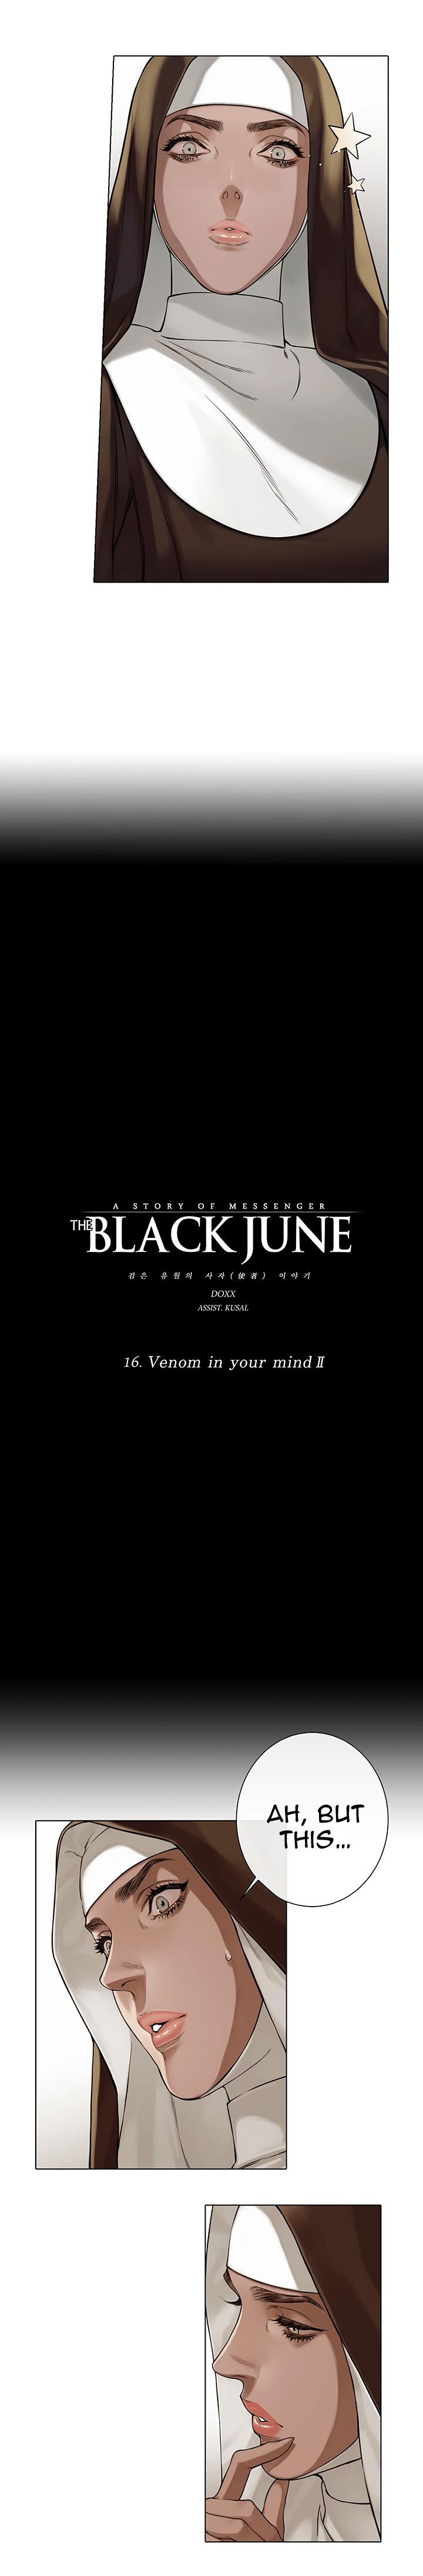 The Black June 16 5